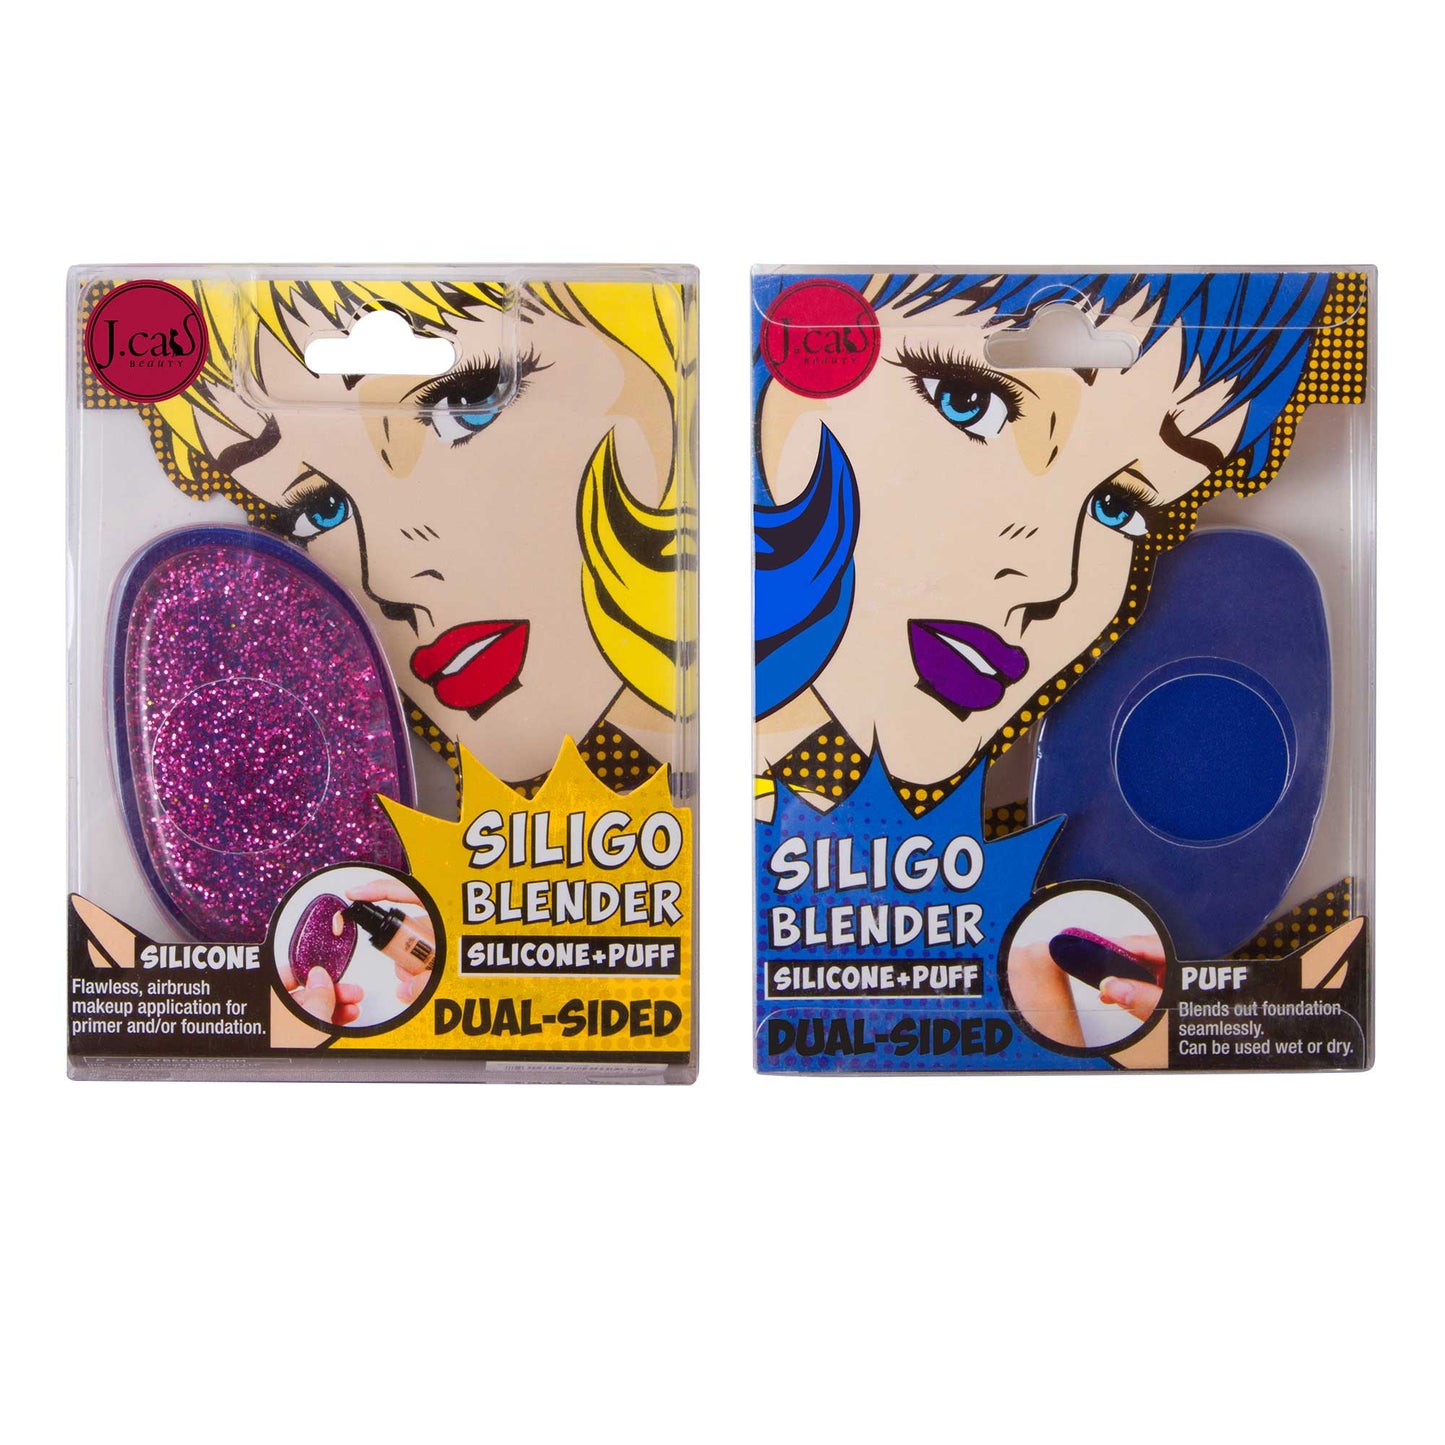 Siligo Blender Silicone + Puff